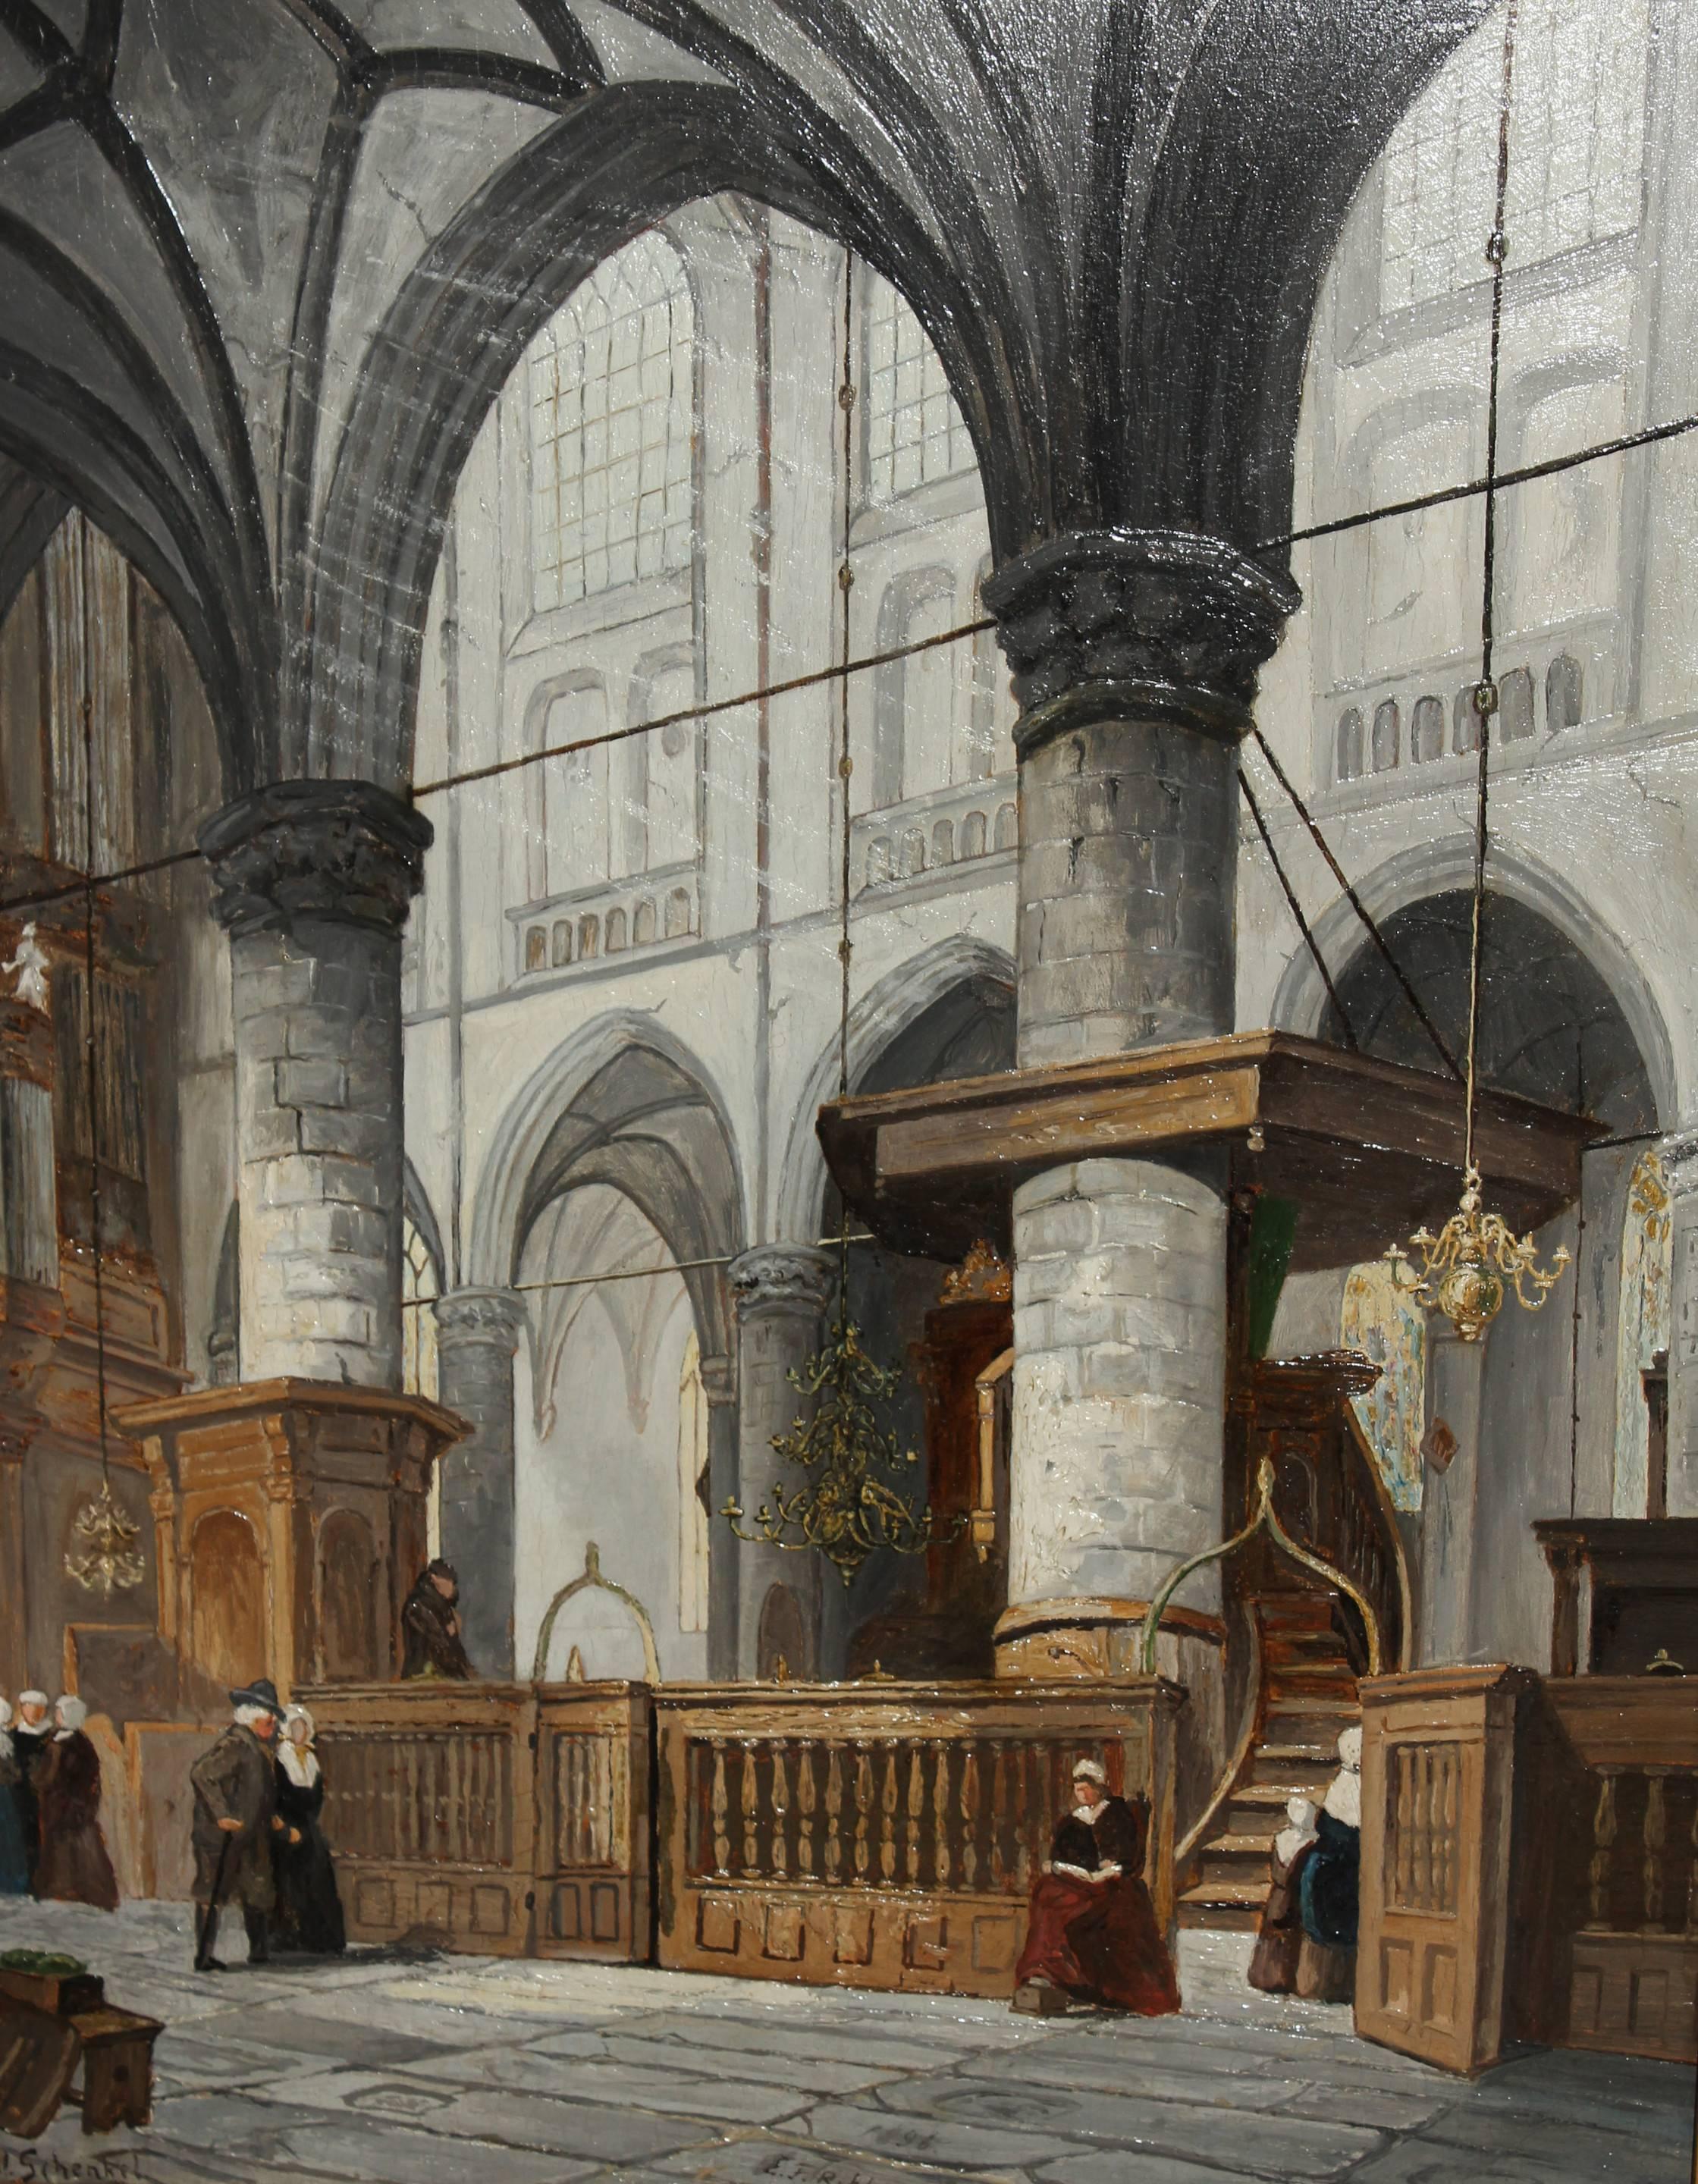 Dutch church interior by Jan Jacob Schenkel 1829-1900 E.F.Rikkers, 1855-1900 oil on panel 16 x 12